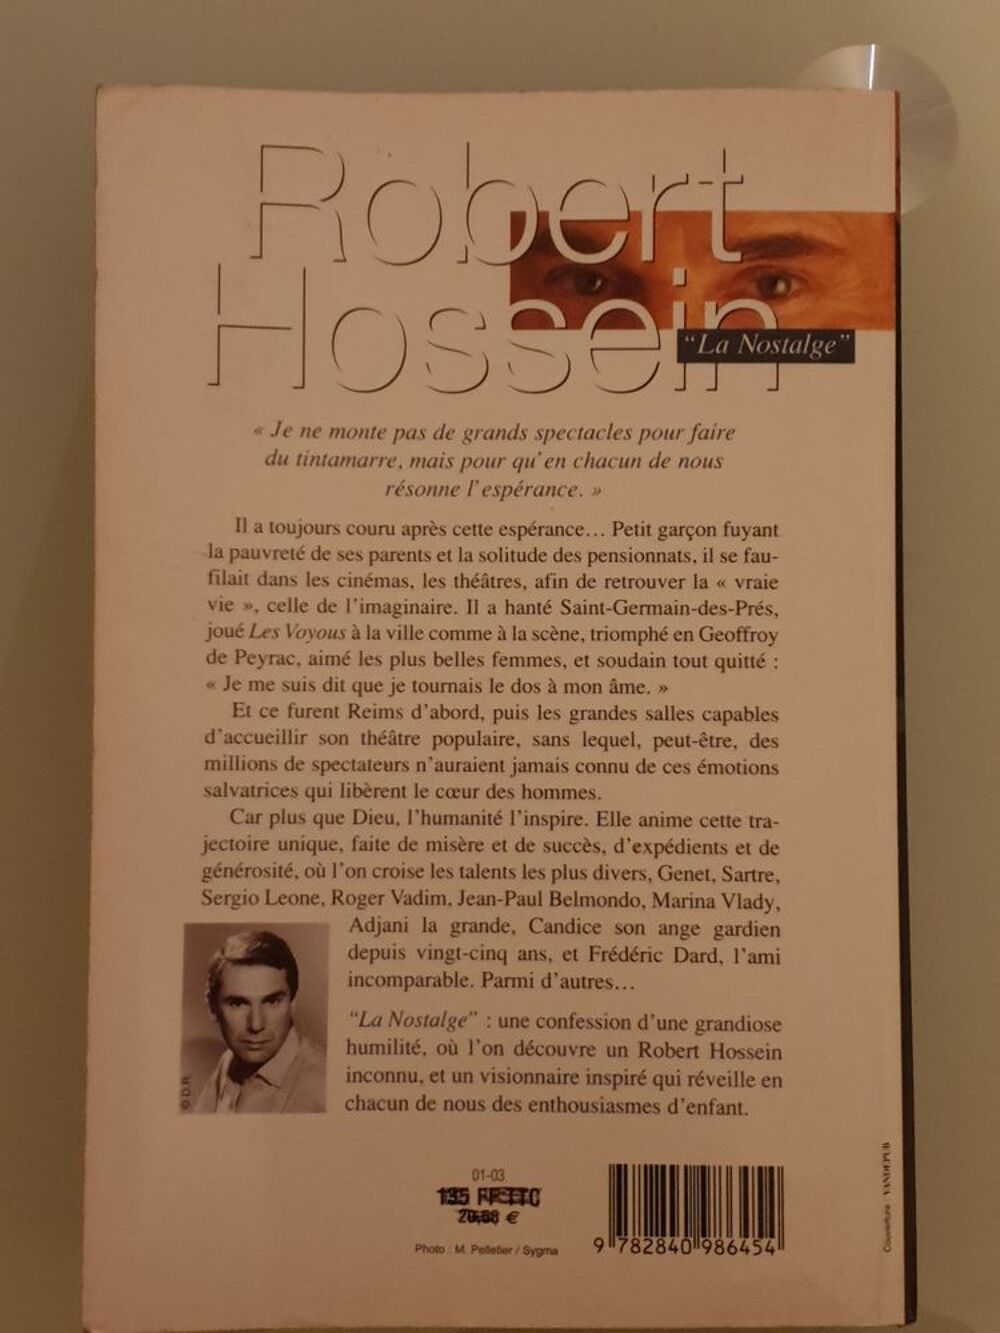 La Nostalge - robert hossein
Marseille 9 eme Livres et BD